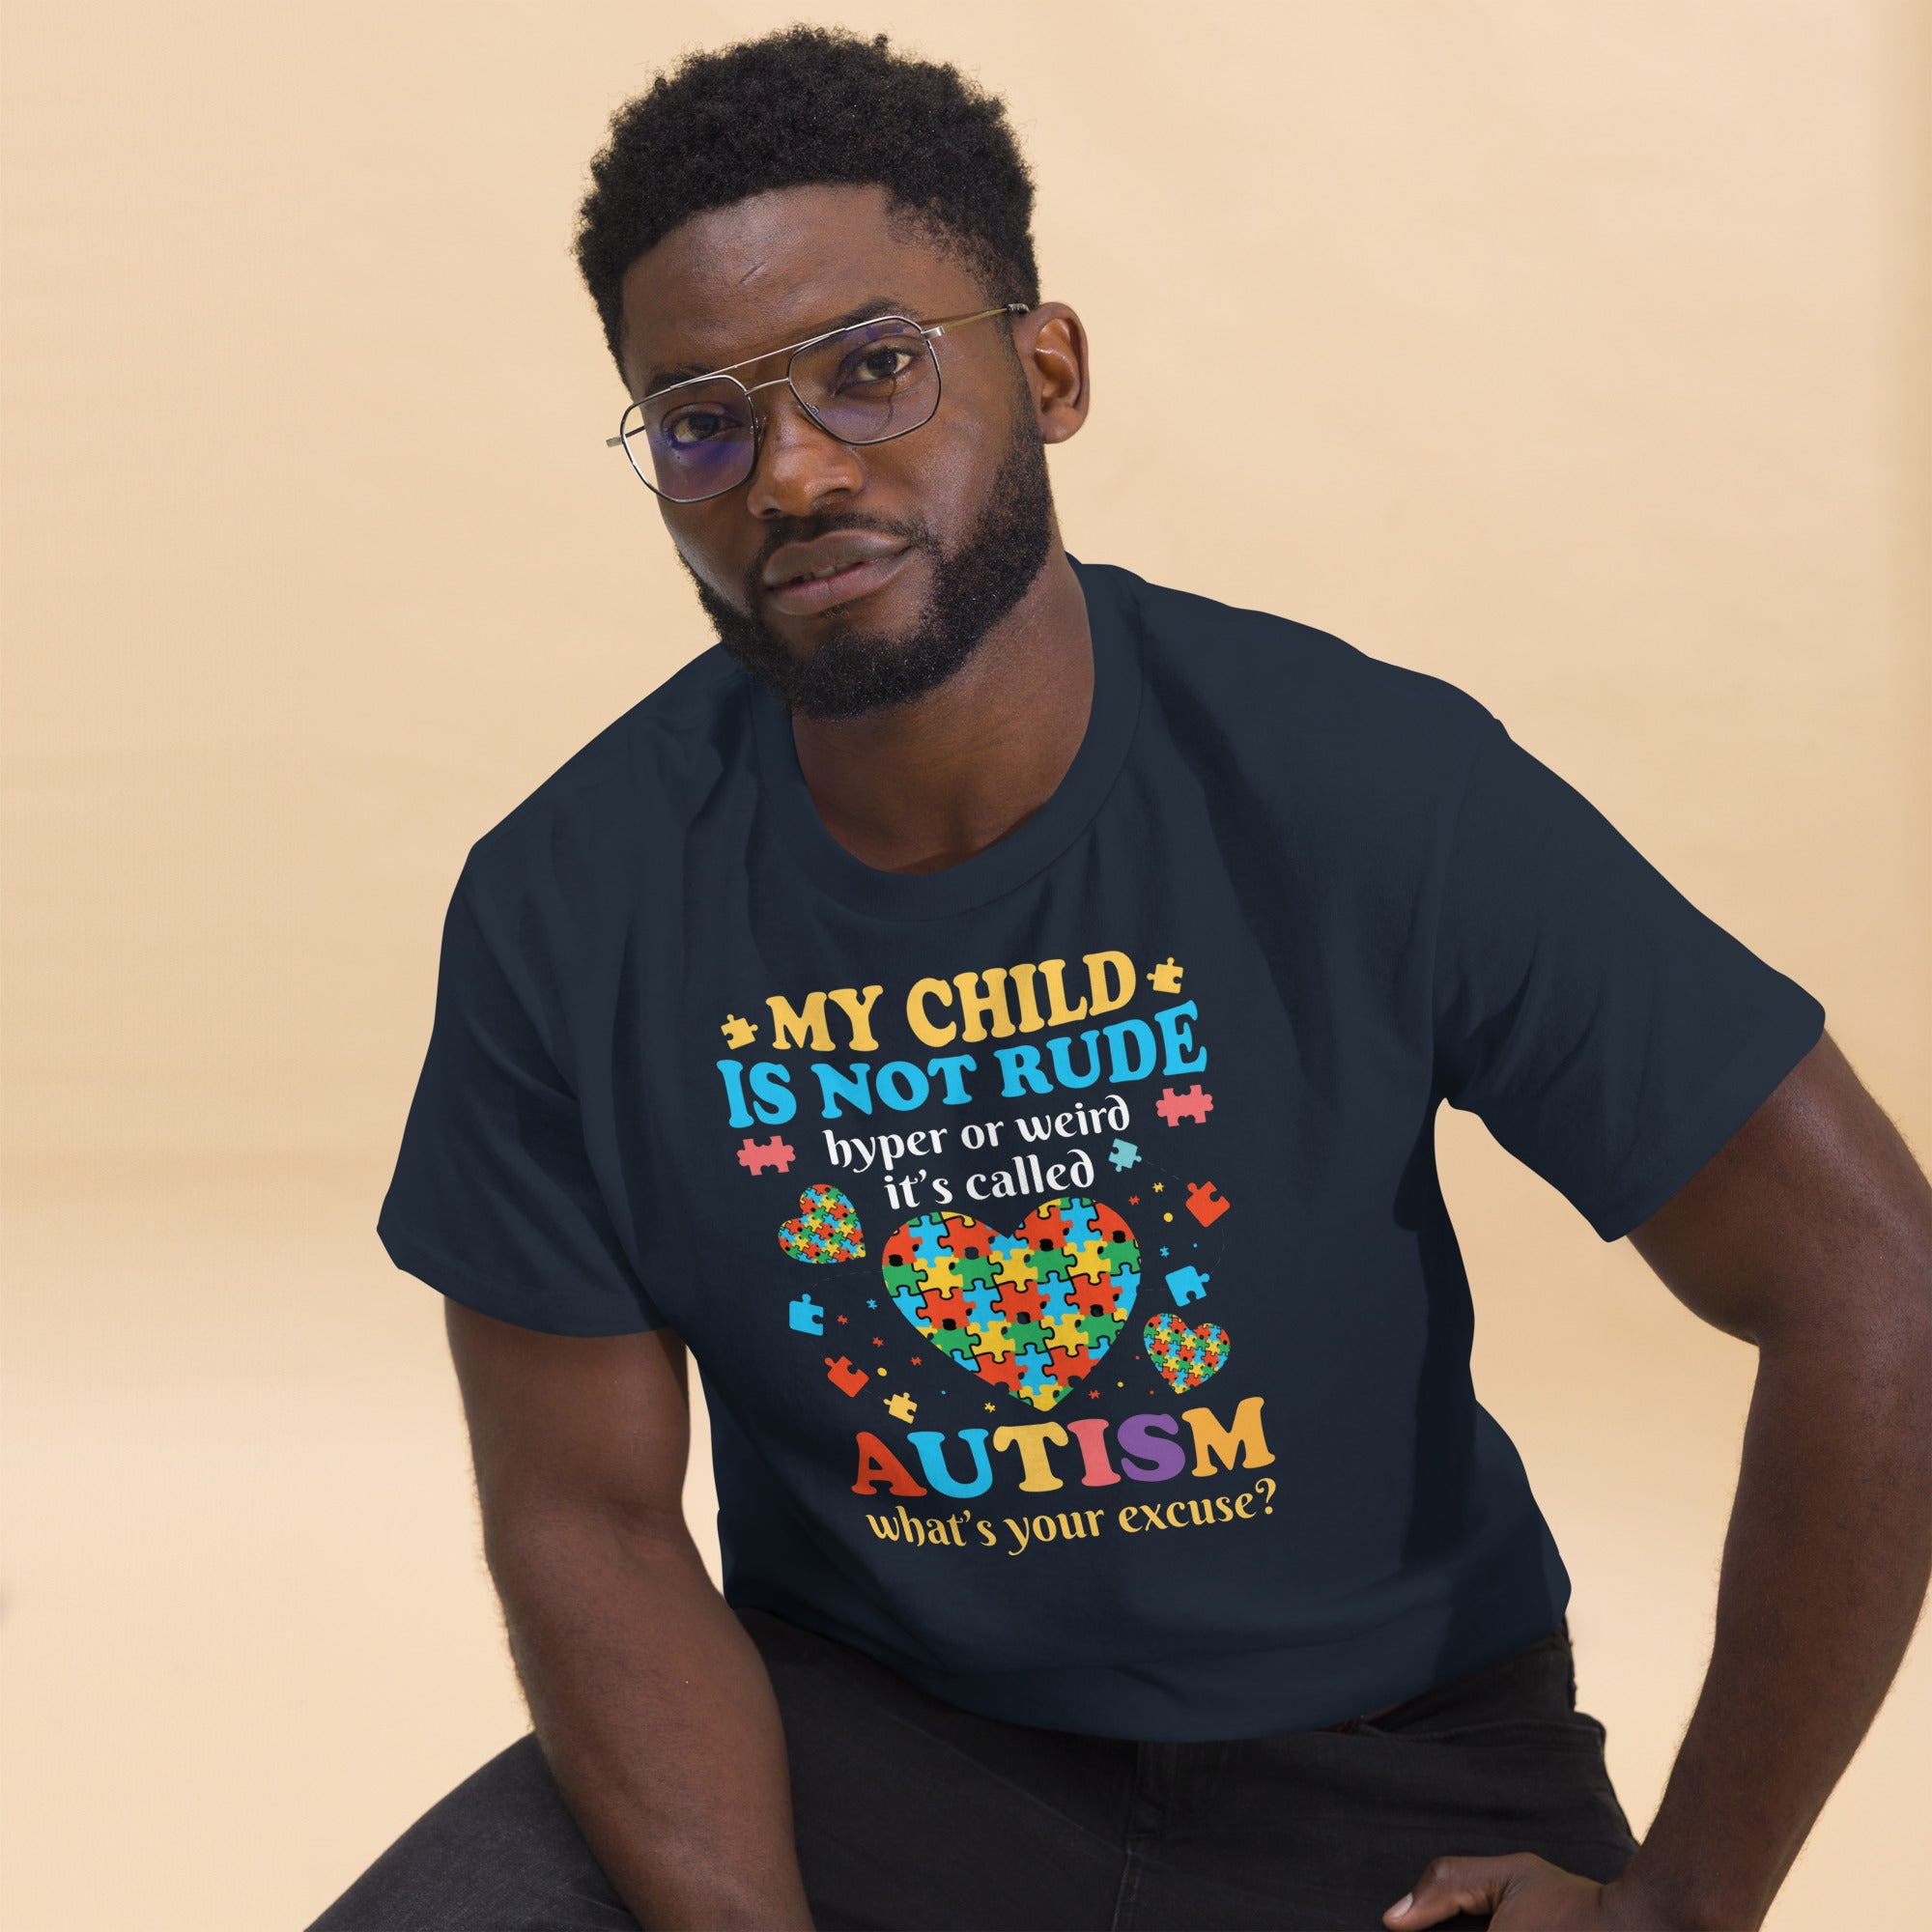 " My child is not rude" Autism Awareness classic tee